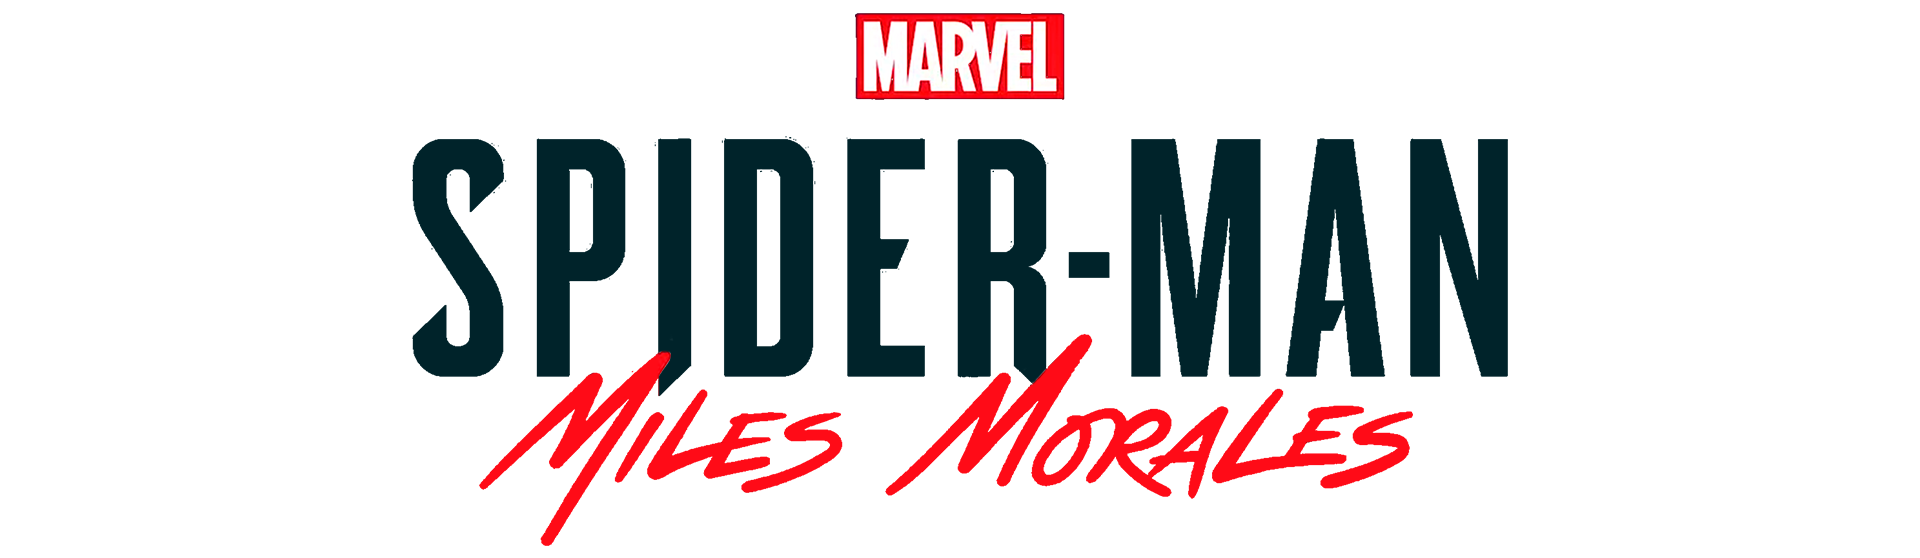 text logo spider man miles morales